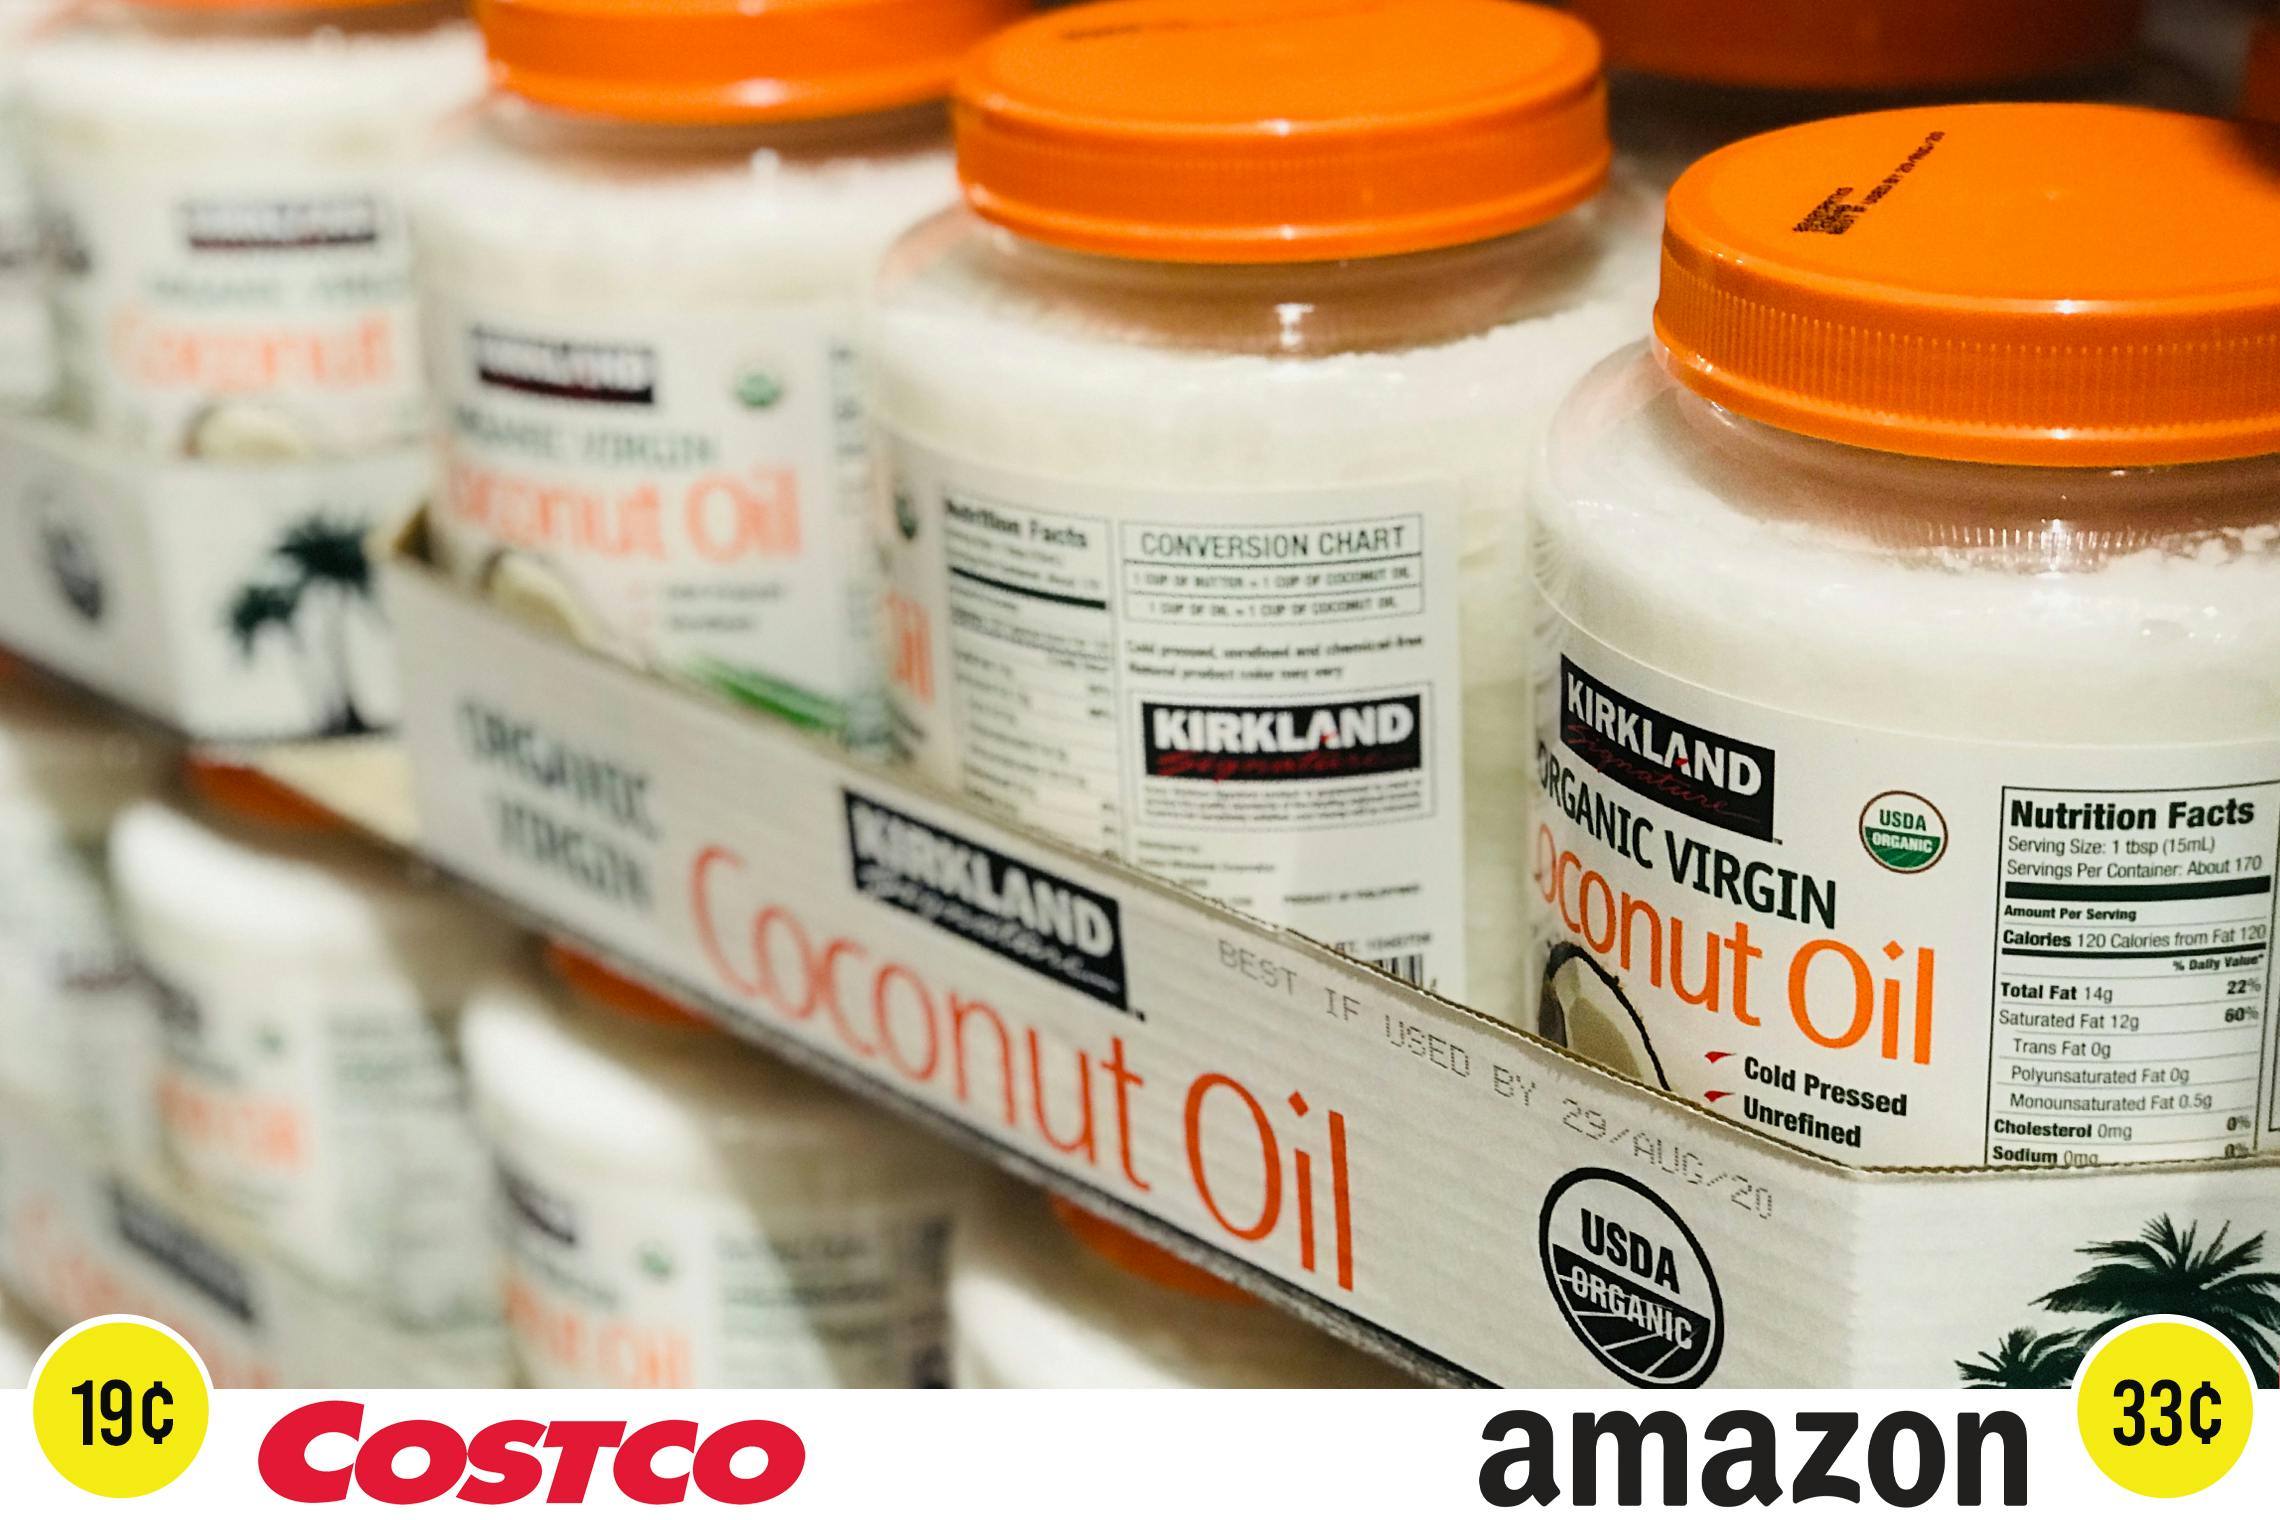 Kirkland brand coconut oil at Costco